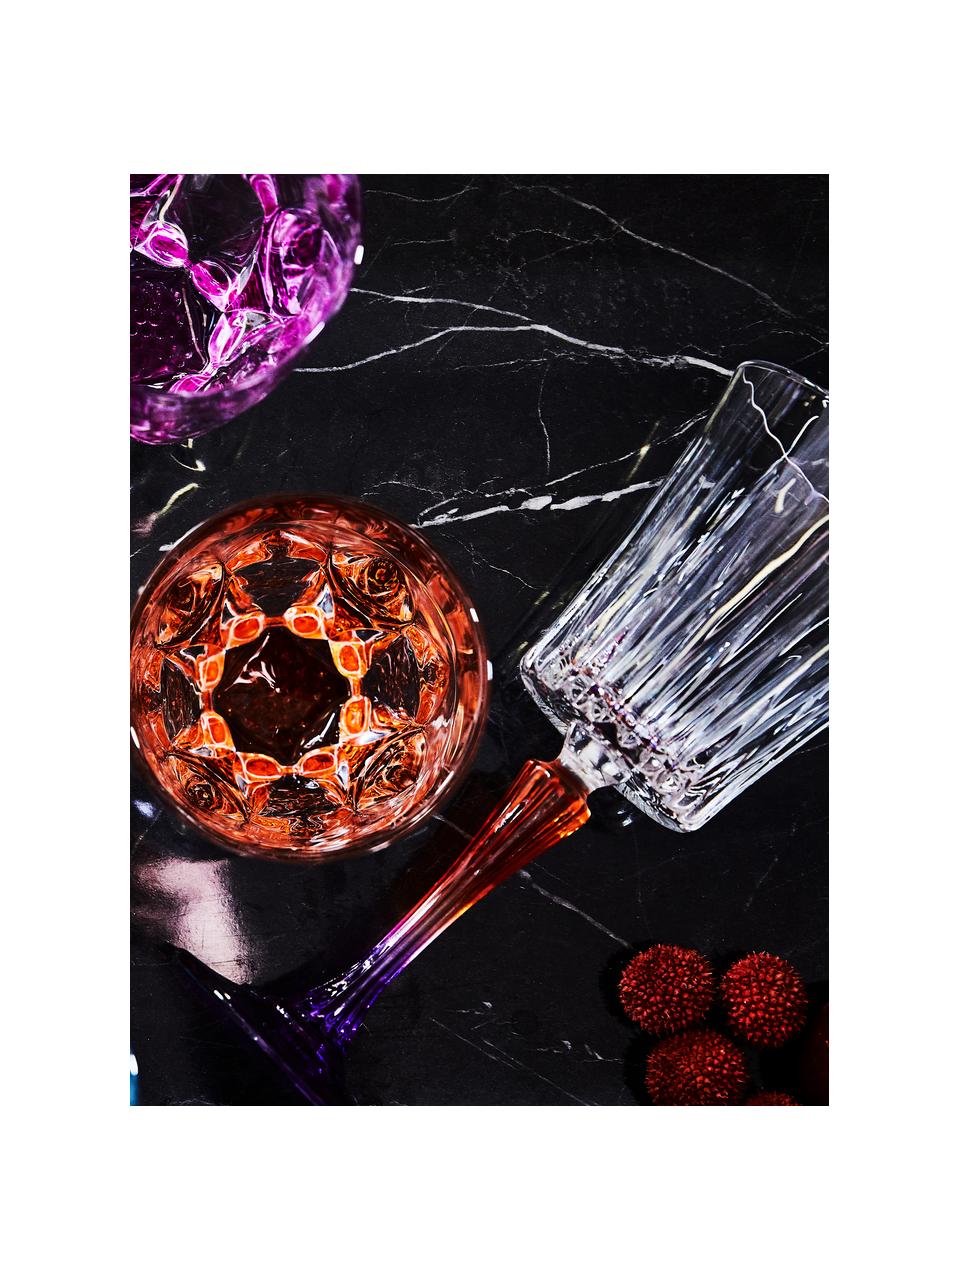 Copas de vino blanco de cristal Gipsy, 6 uds., Cristal Luxion, Transparente, naranja, lila, Ø 9 x Al 21 cm